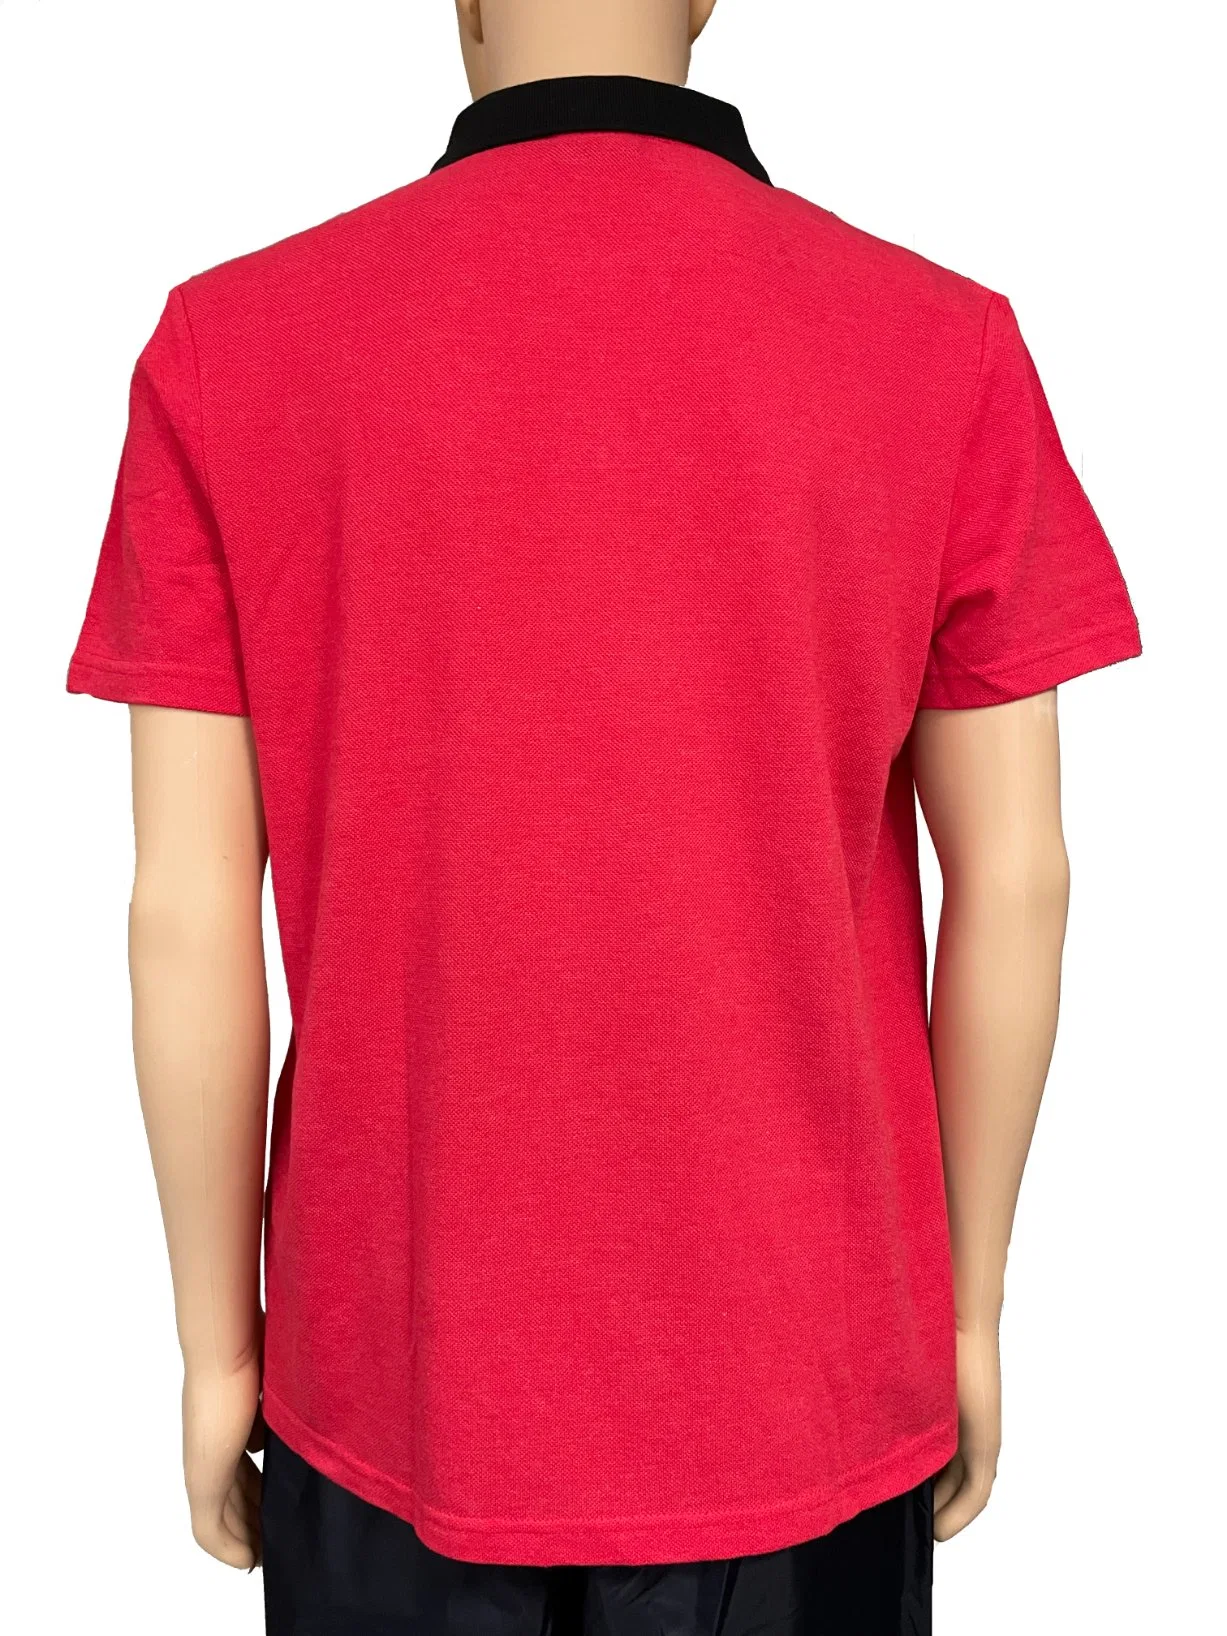 OEM / ODM Polo Shirts Herren Bekleidung Großhandel/Lieferant Polo T-Shirts